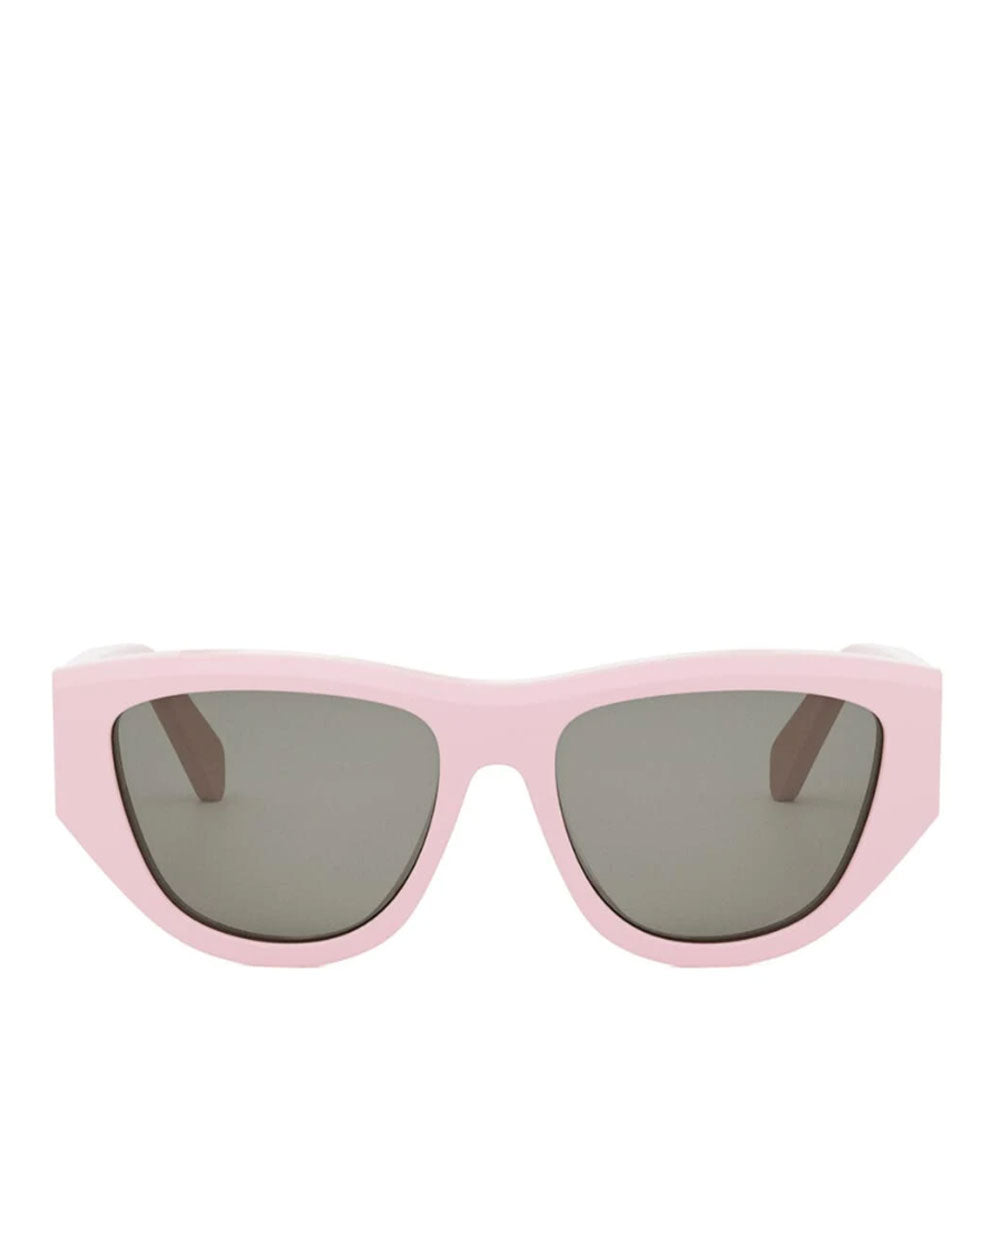 Monochroms Sunglasses in Light Pink